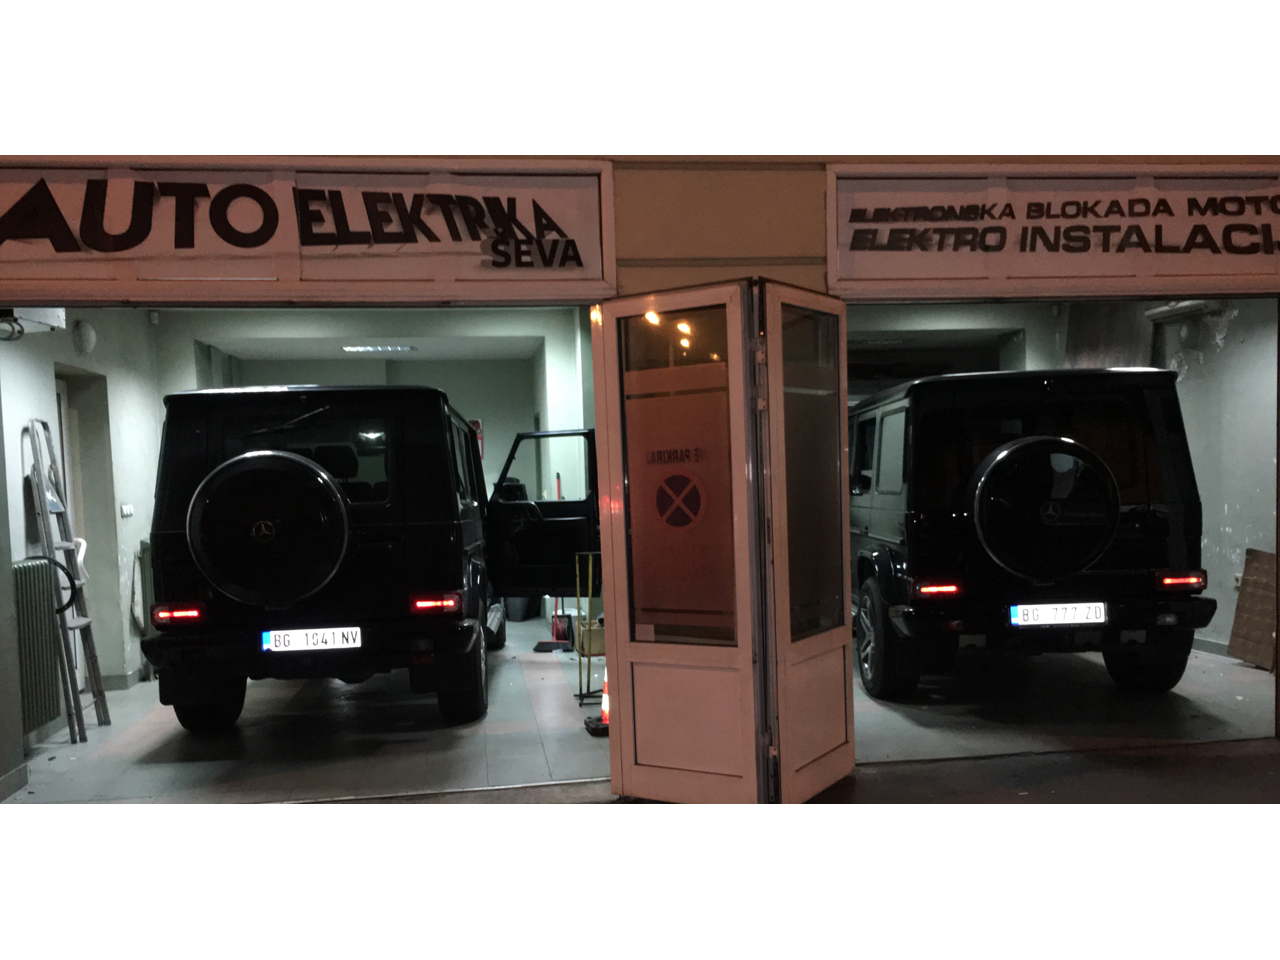 CAR ELECTRIC SEVA - SCORPIO Car alarm systems Beograd